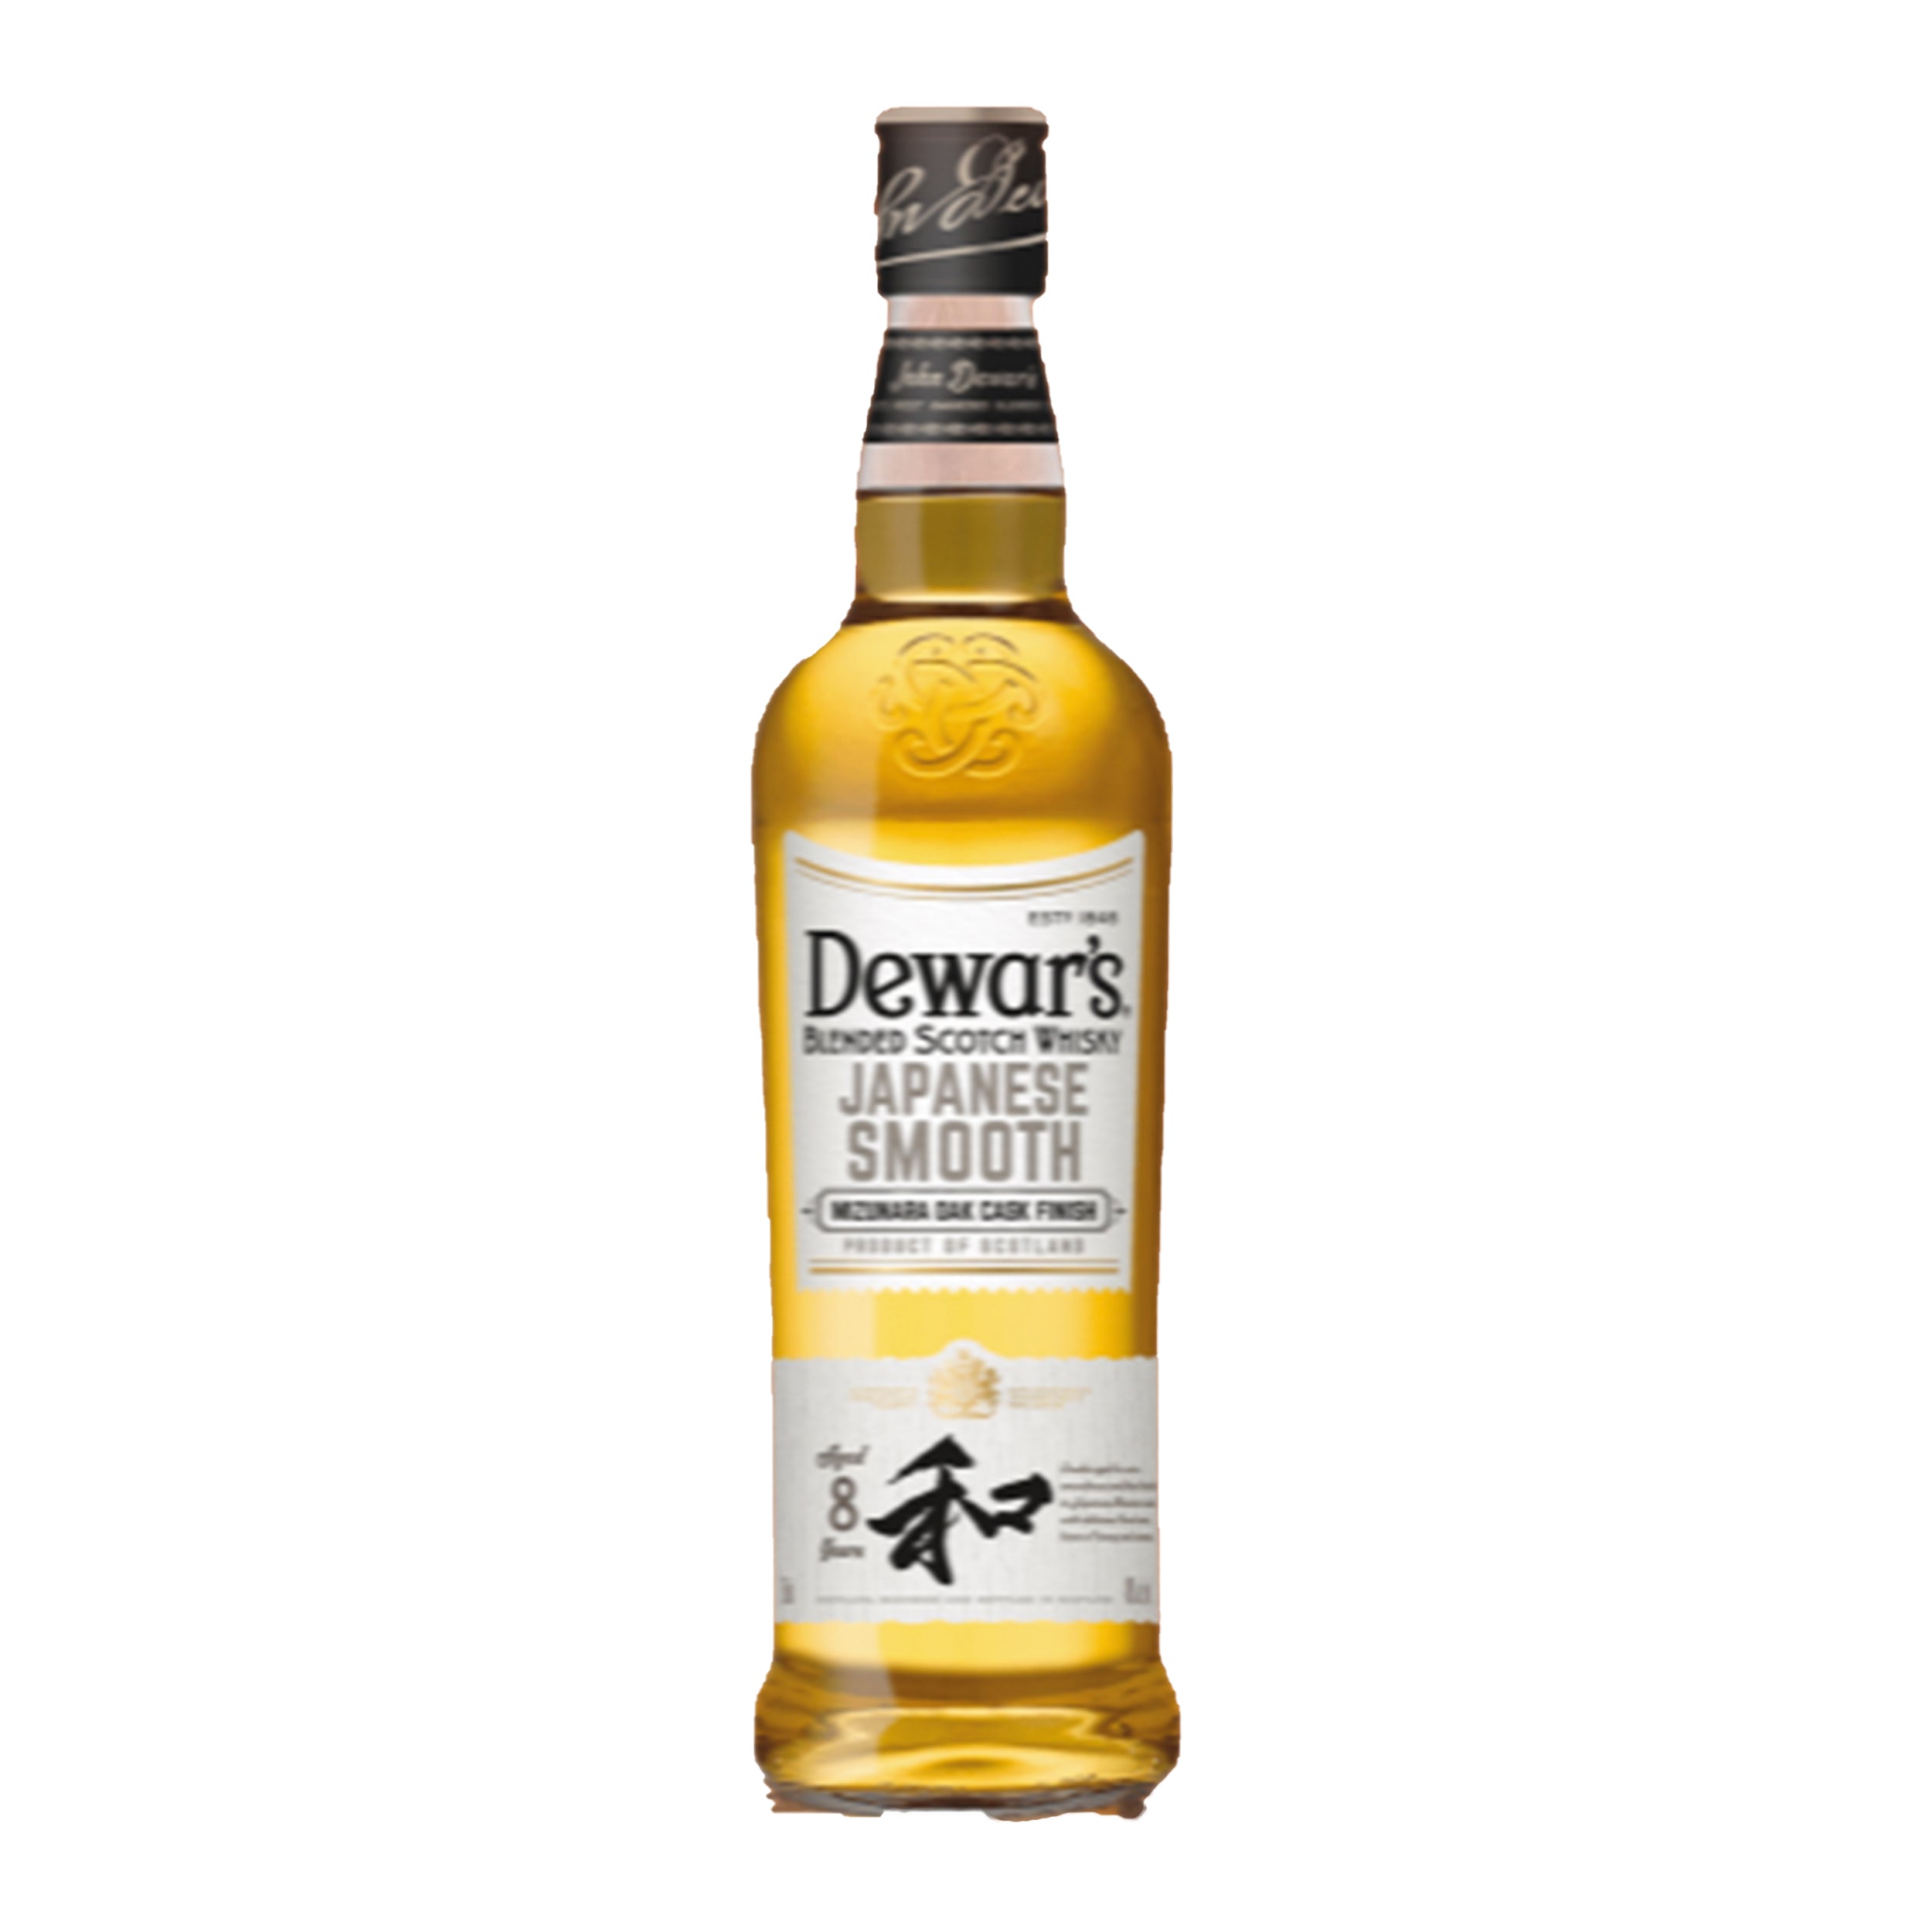 Whisky Dewar's Founder's Reserve Scotch Whisky 18 ans d'age